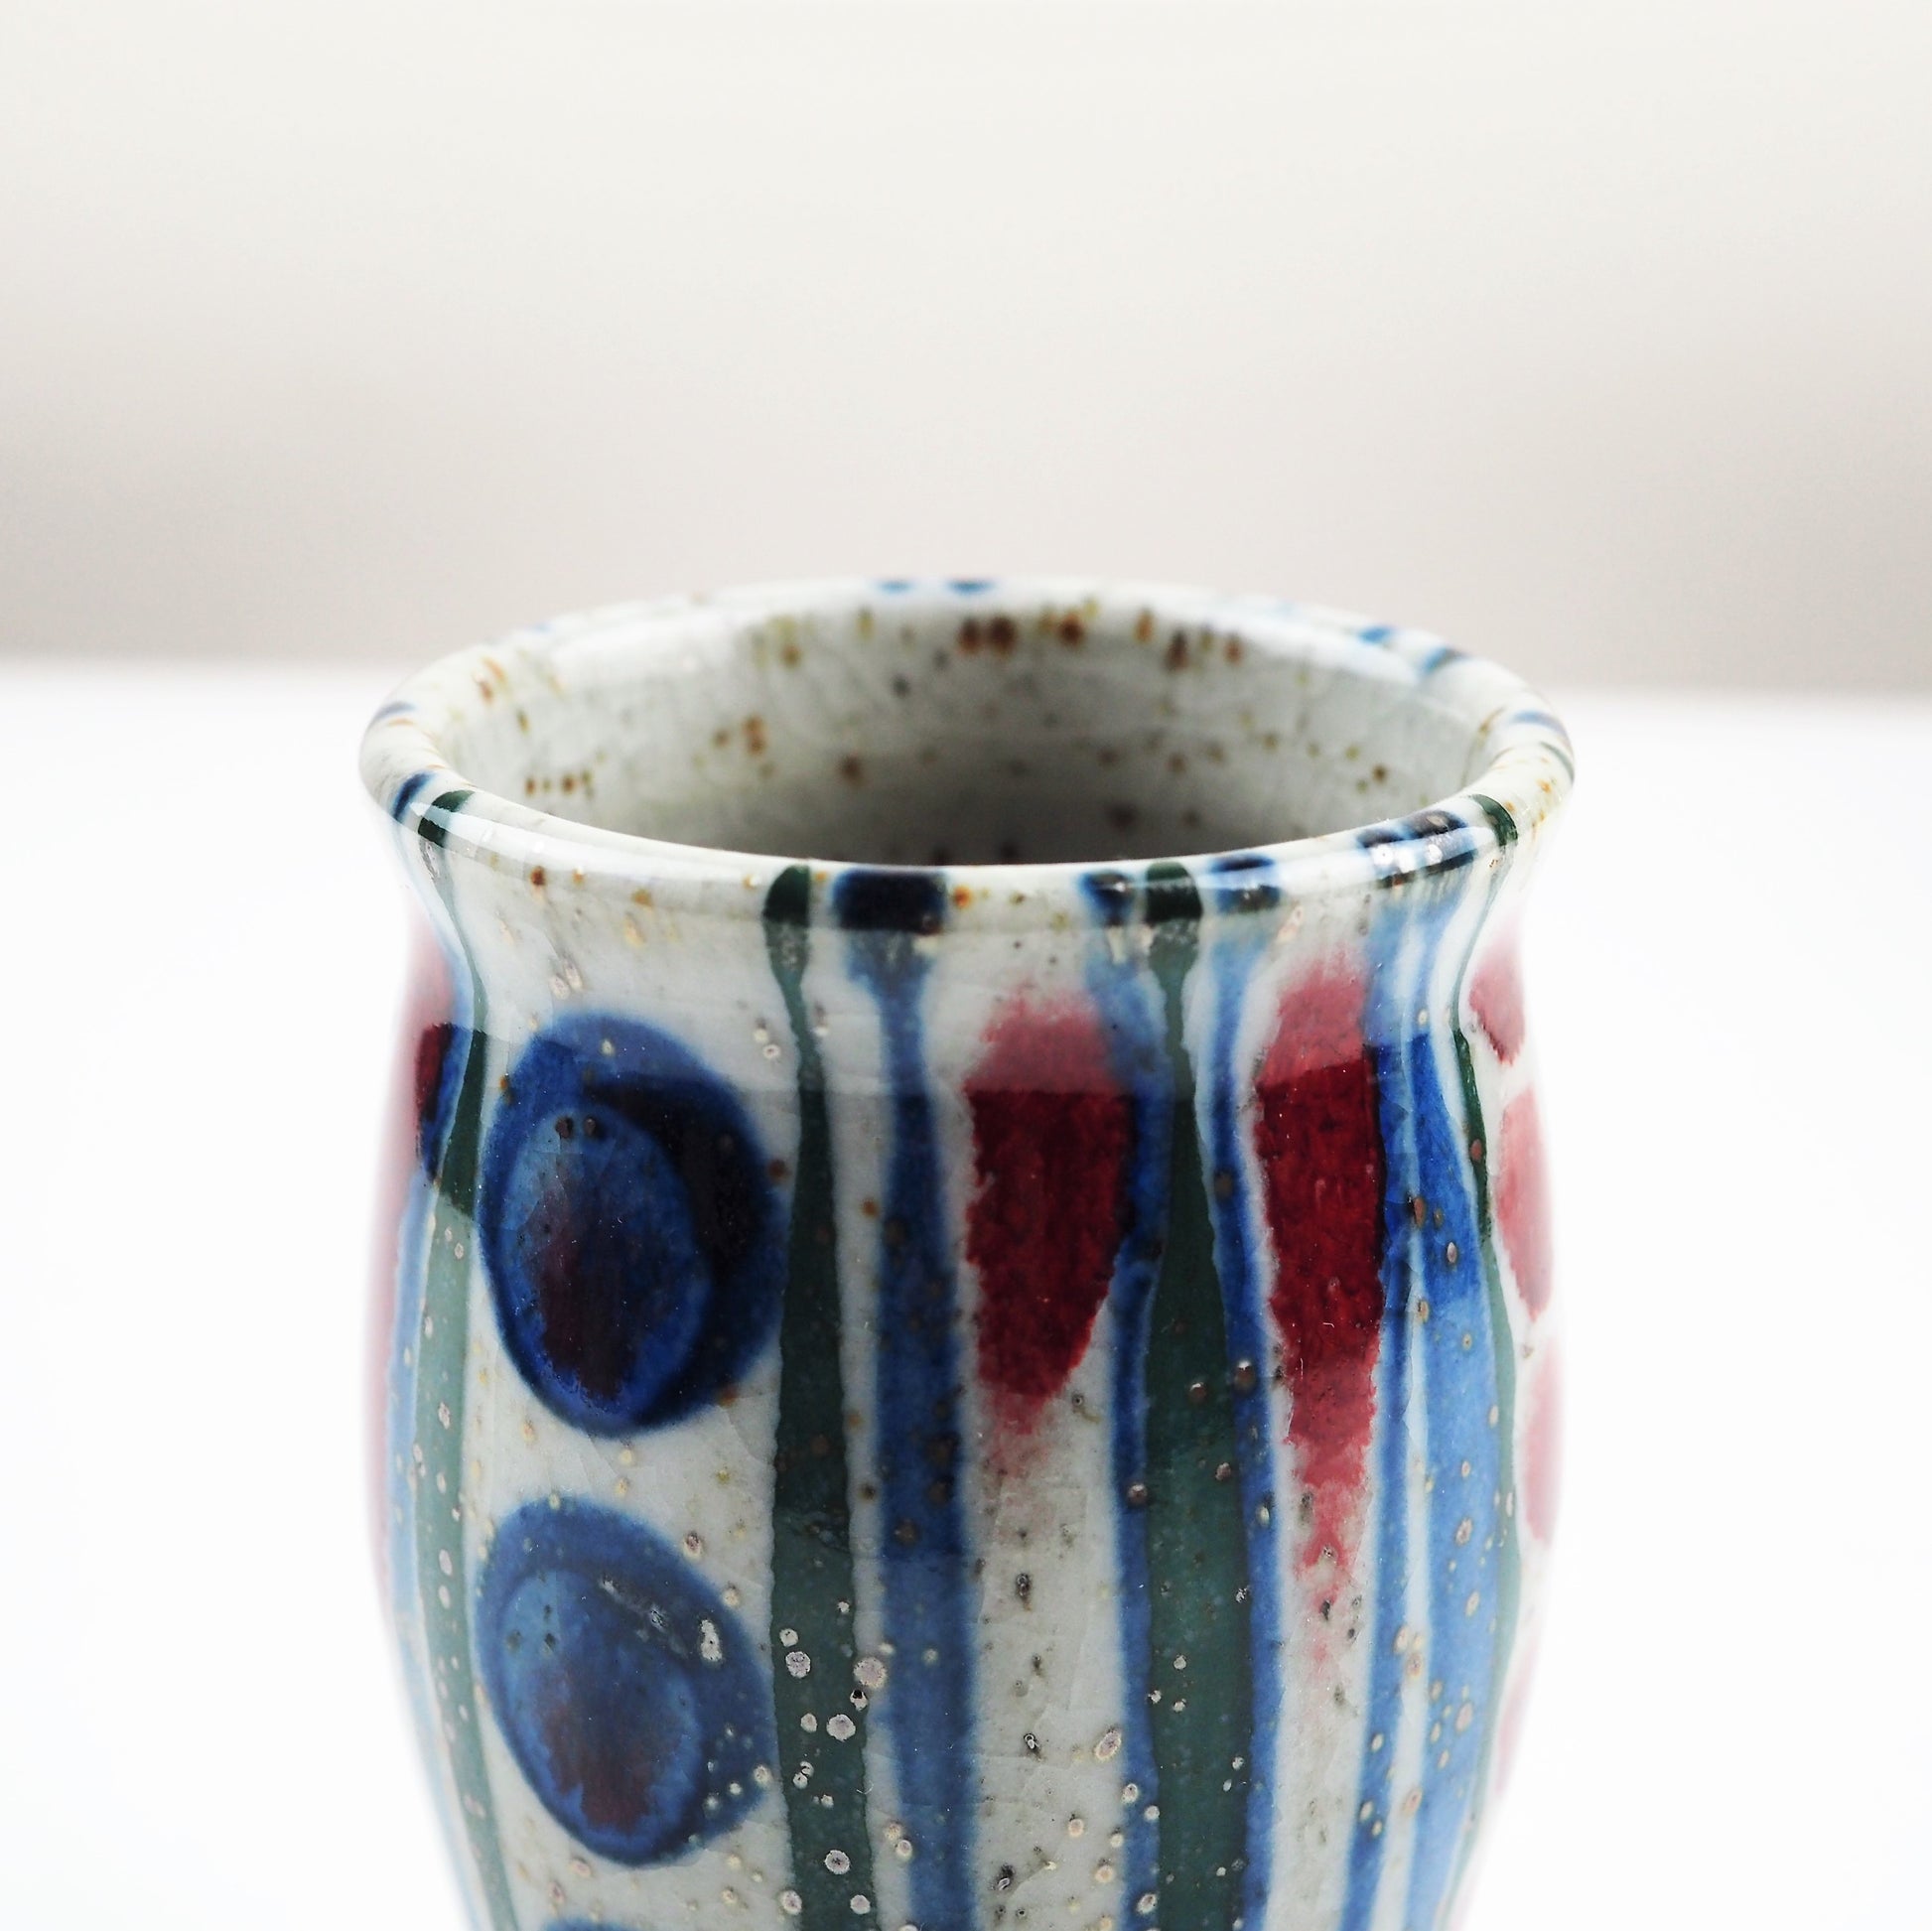 Goldsmith, Robert – Red, Blue and Green Mini Vase | Robert Goldsmith | Primavera Gallery